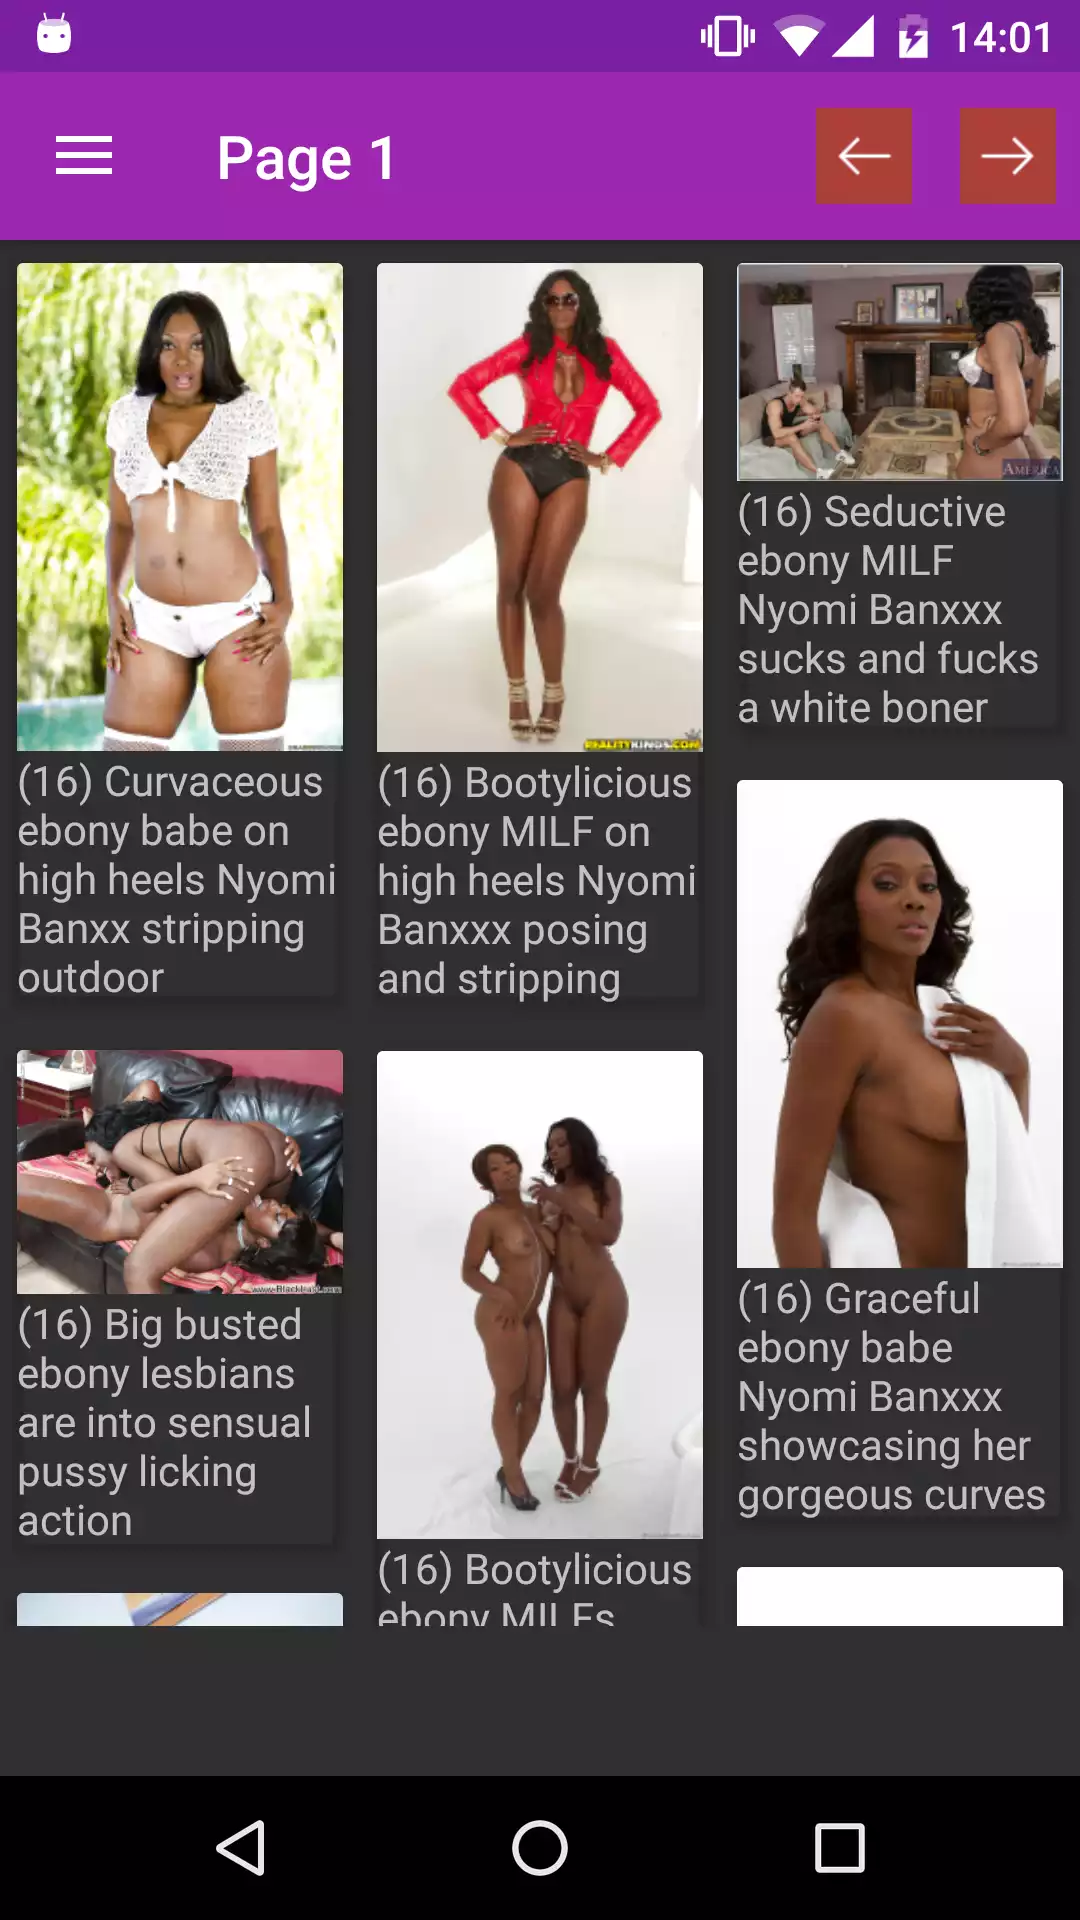 Nyomi Banxxx galleries aplikasi,download,wallpapers,hentai,hetai,sexy,pic,black,photos,android,app,erotic,photo,porn,galleries,pornstar,tits,ebony,apps,nyomi,star,application,sissy,banxxx,for,editor,hantai